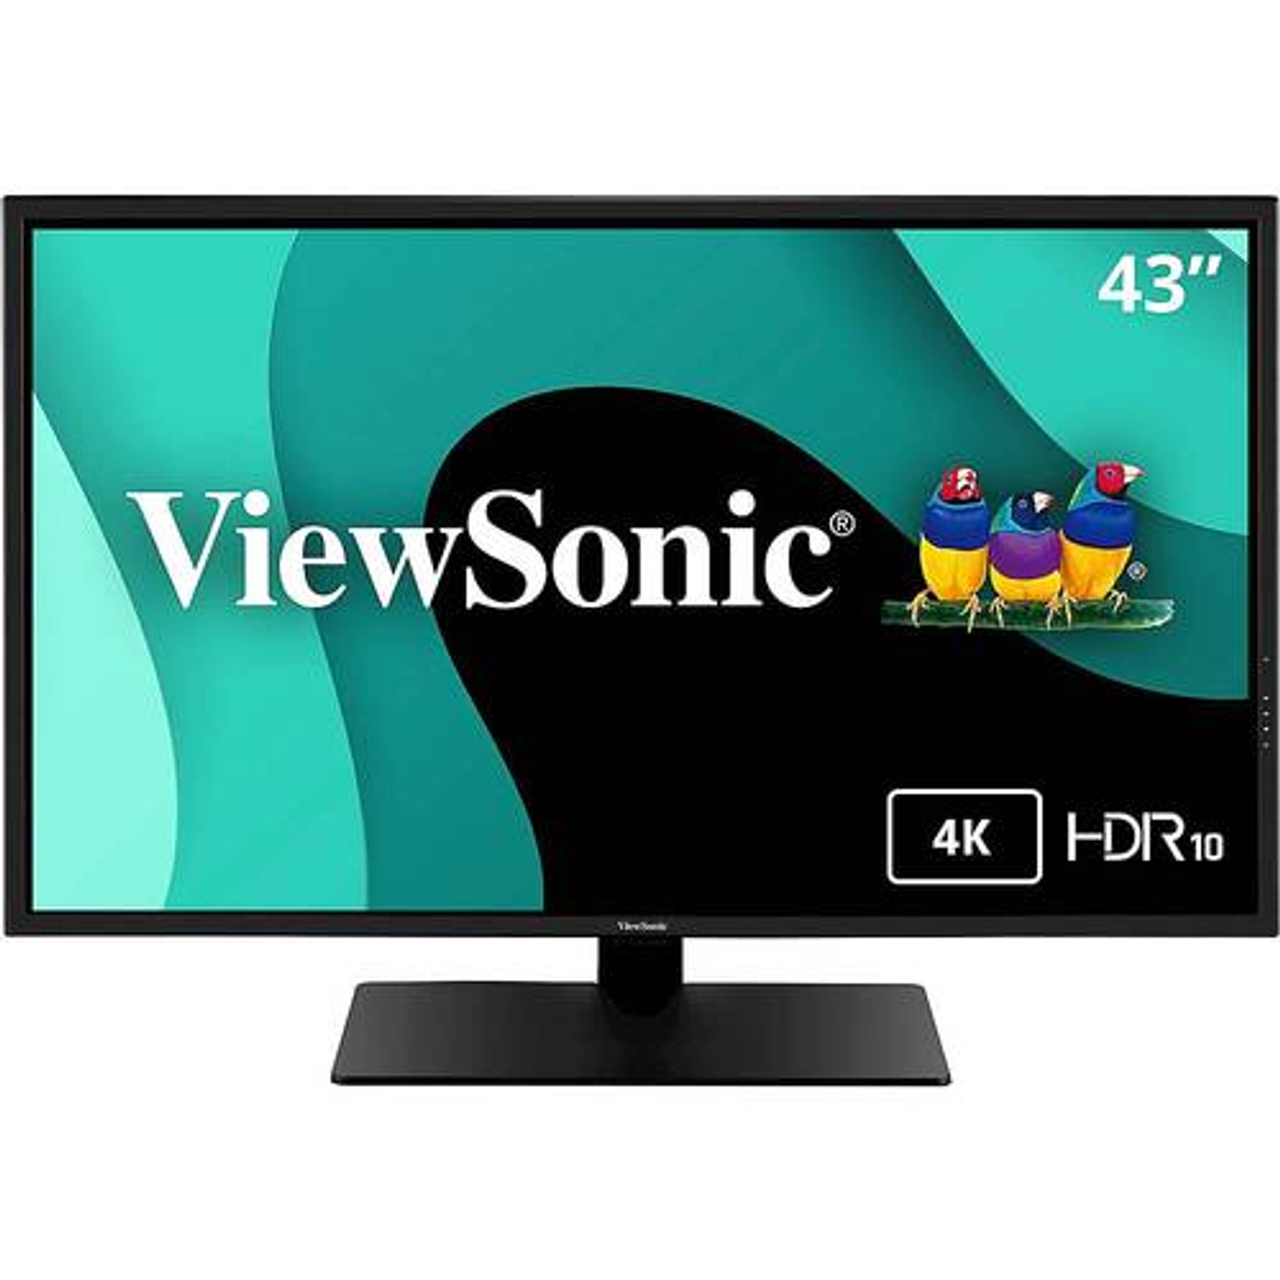 ViewSonic - 43" LED 4K UHD Monitor with HDR (DisplayPort, mini DisplayPort, HDMI)